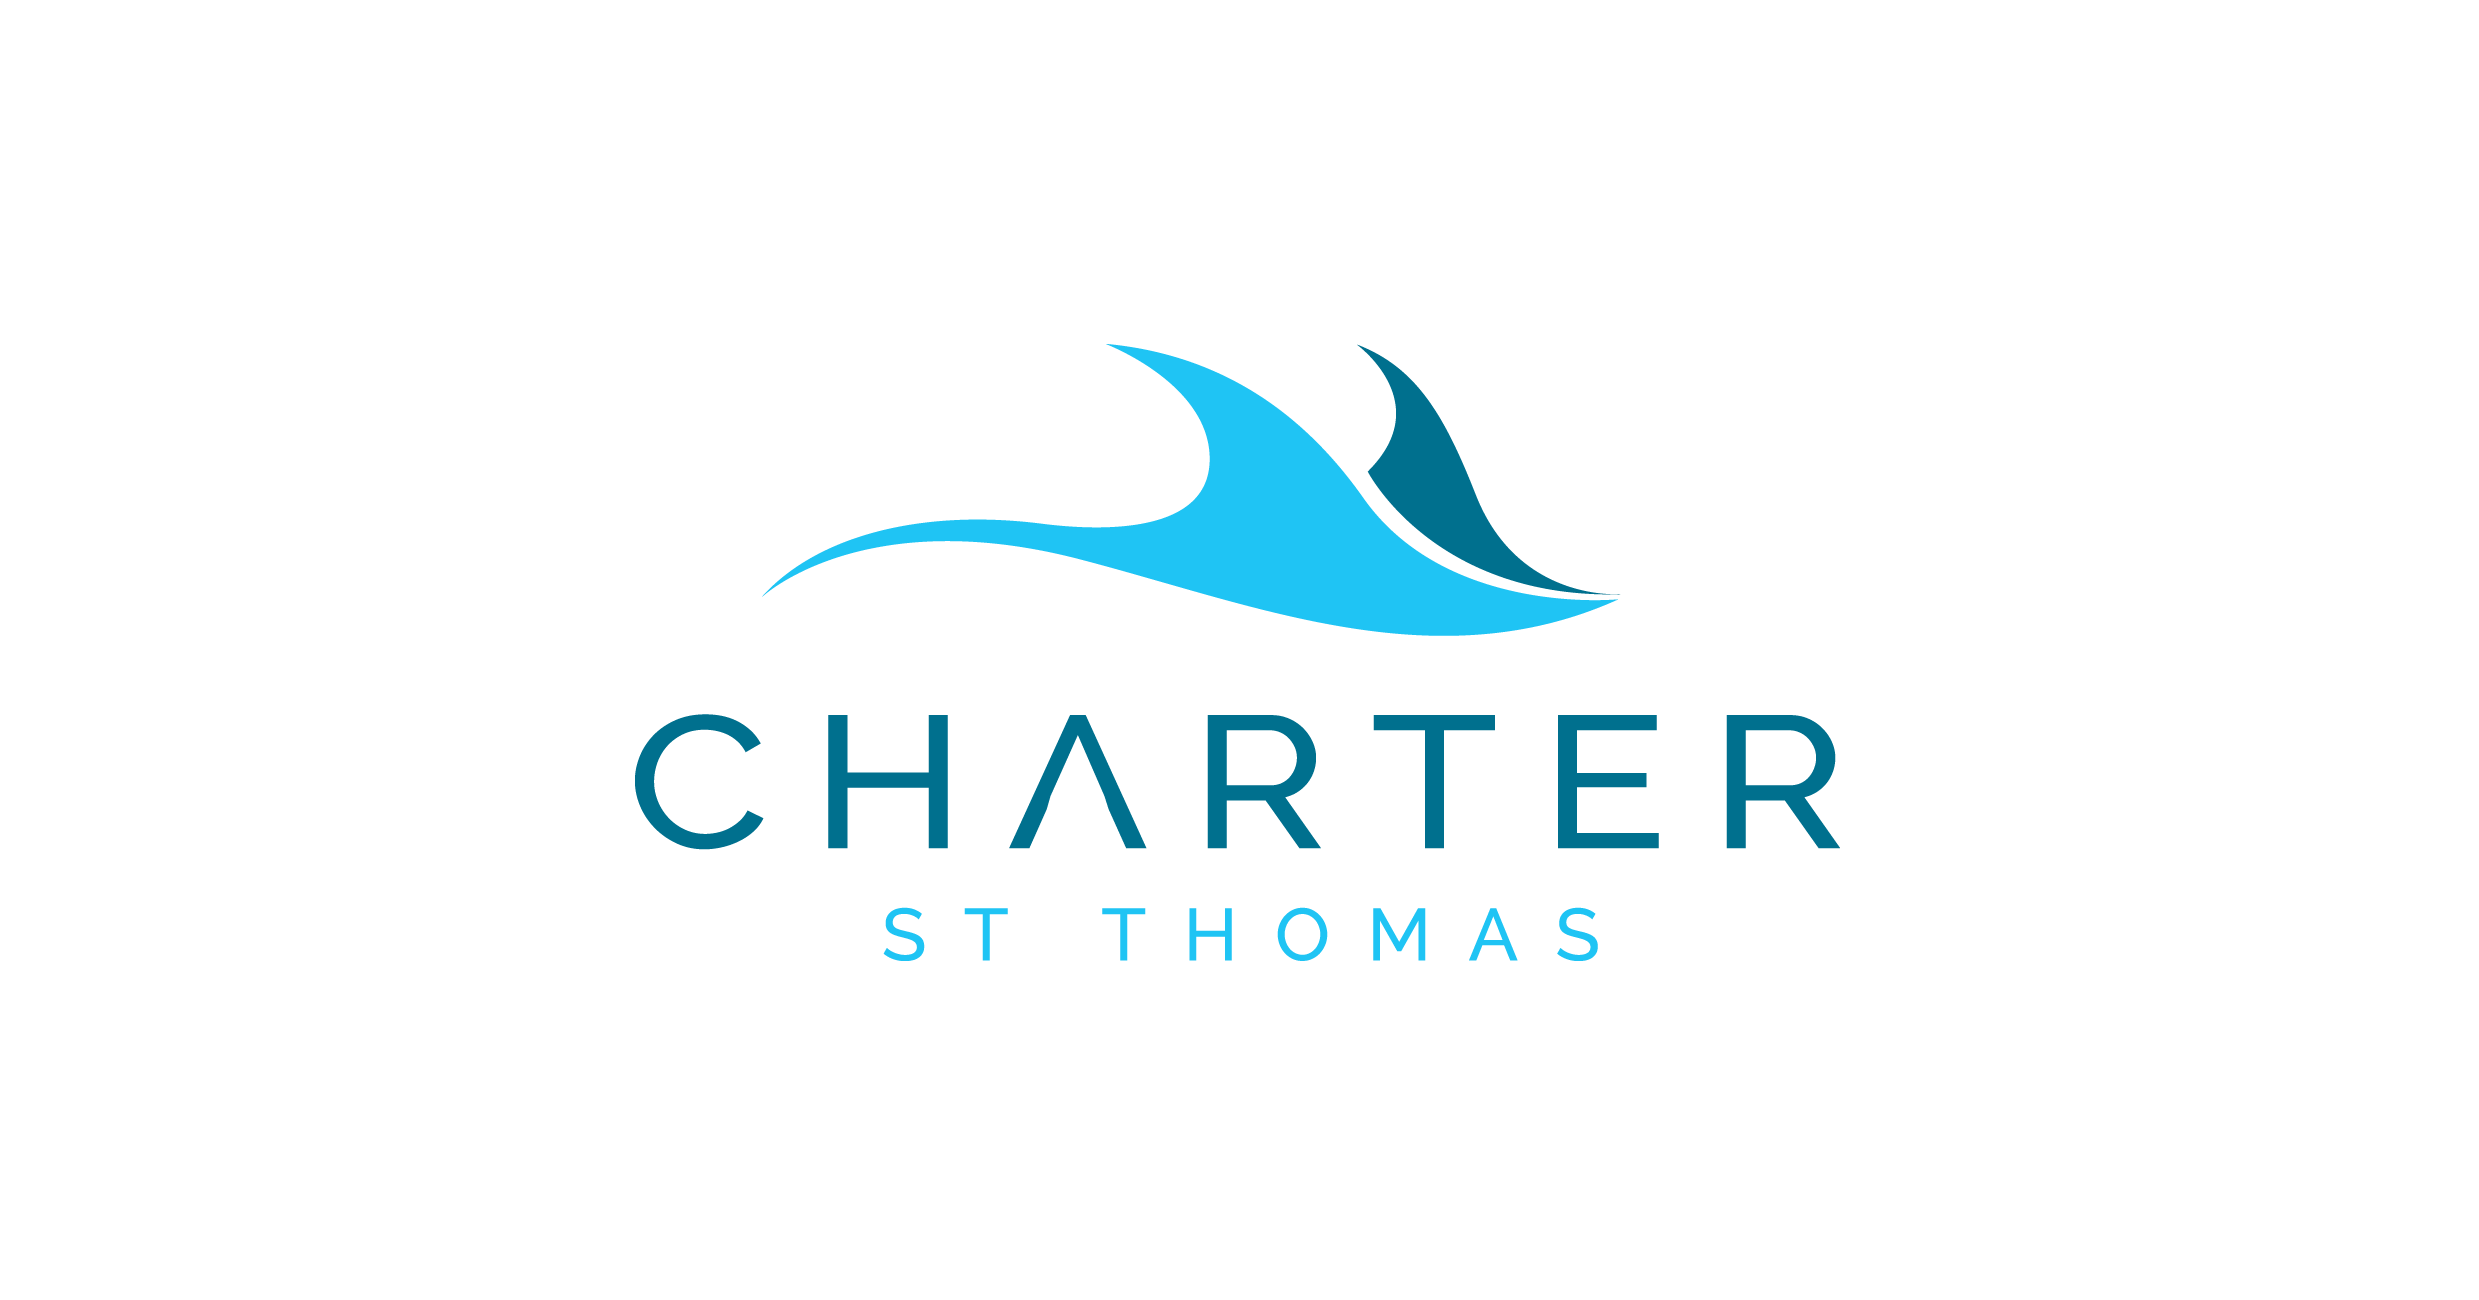 Charter St. Thomas